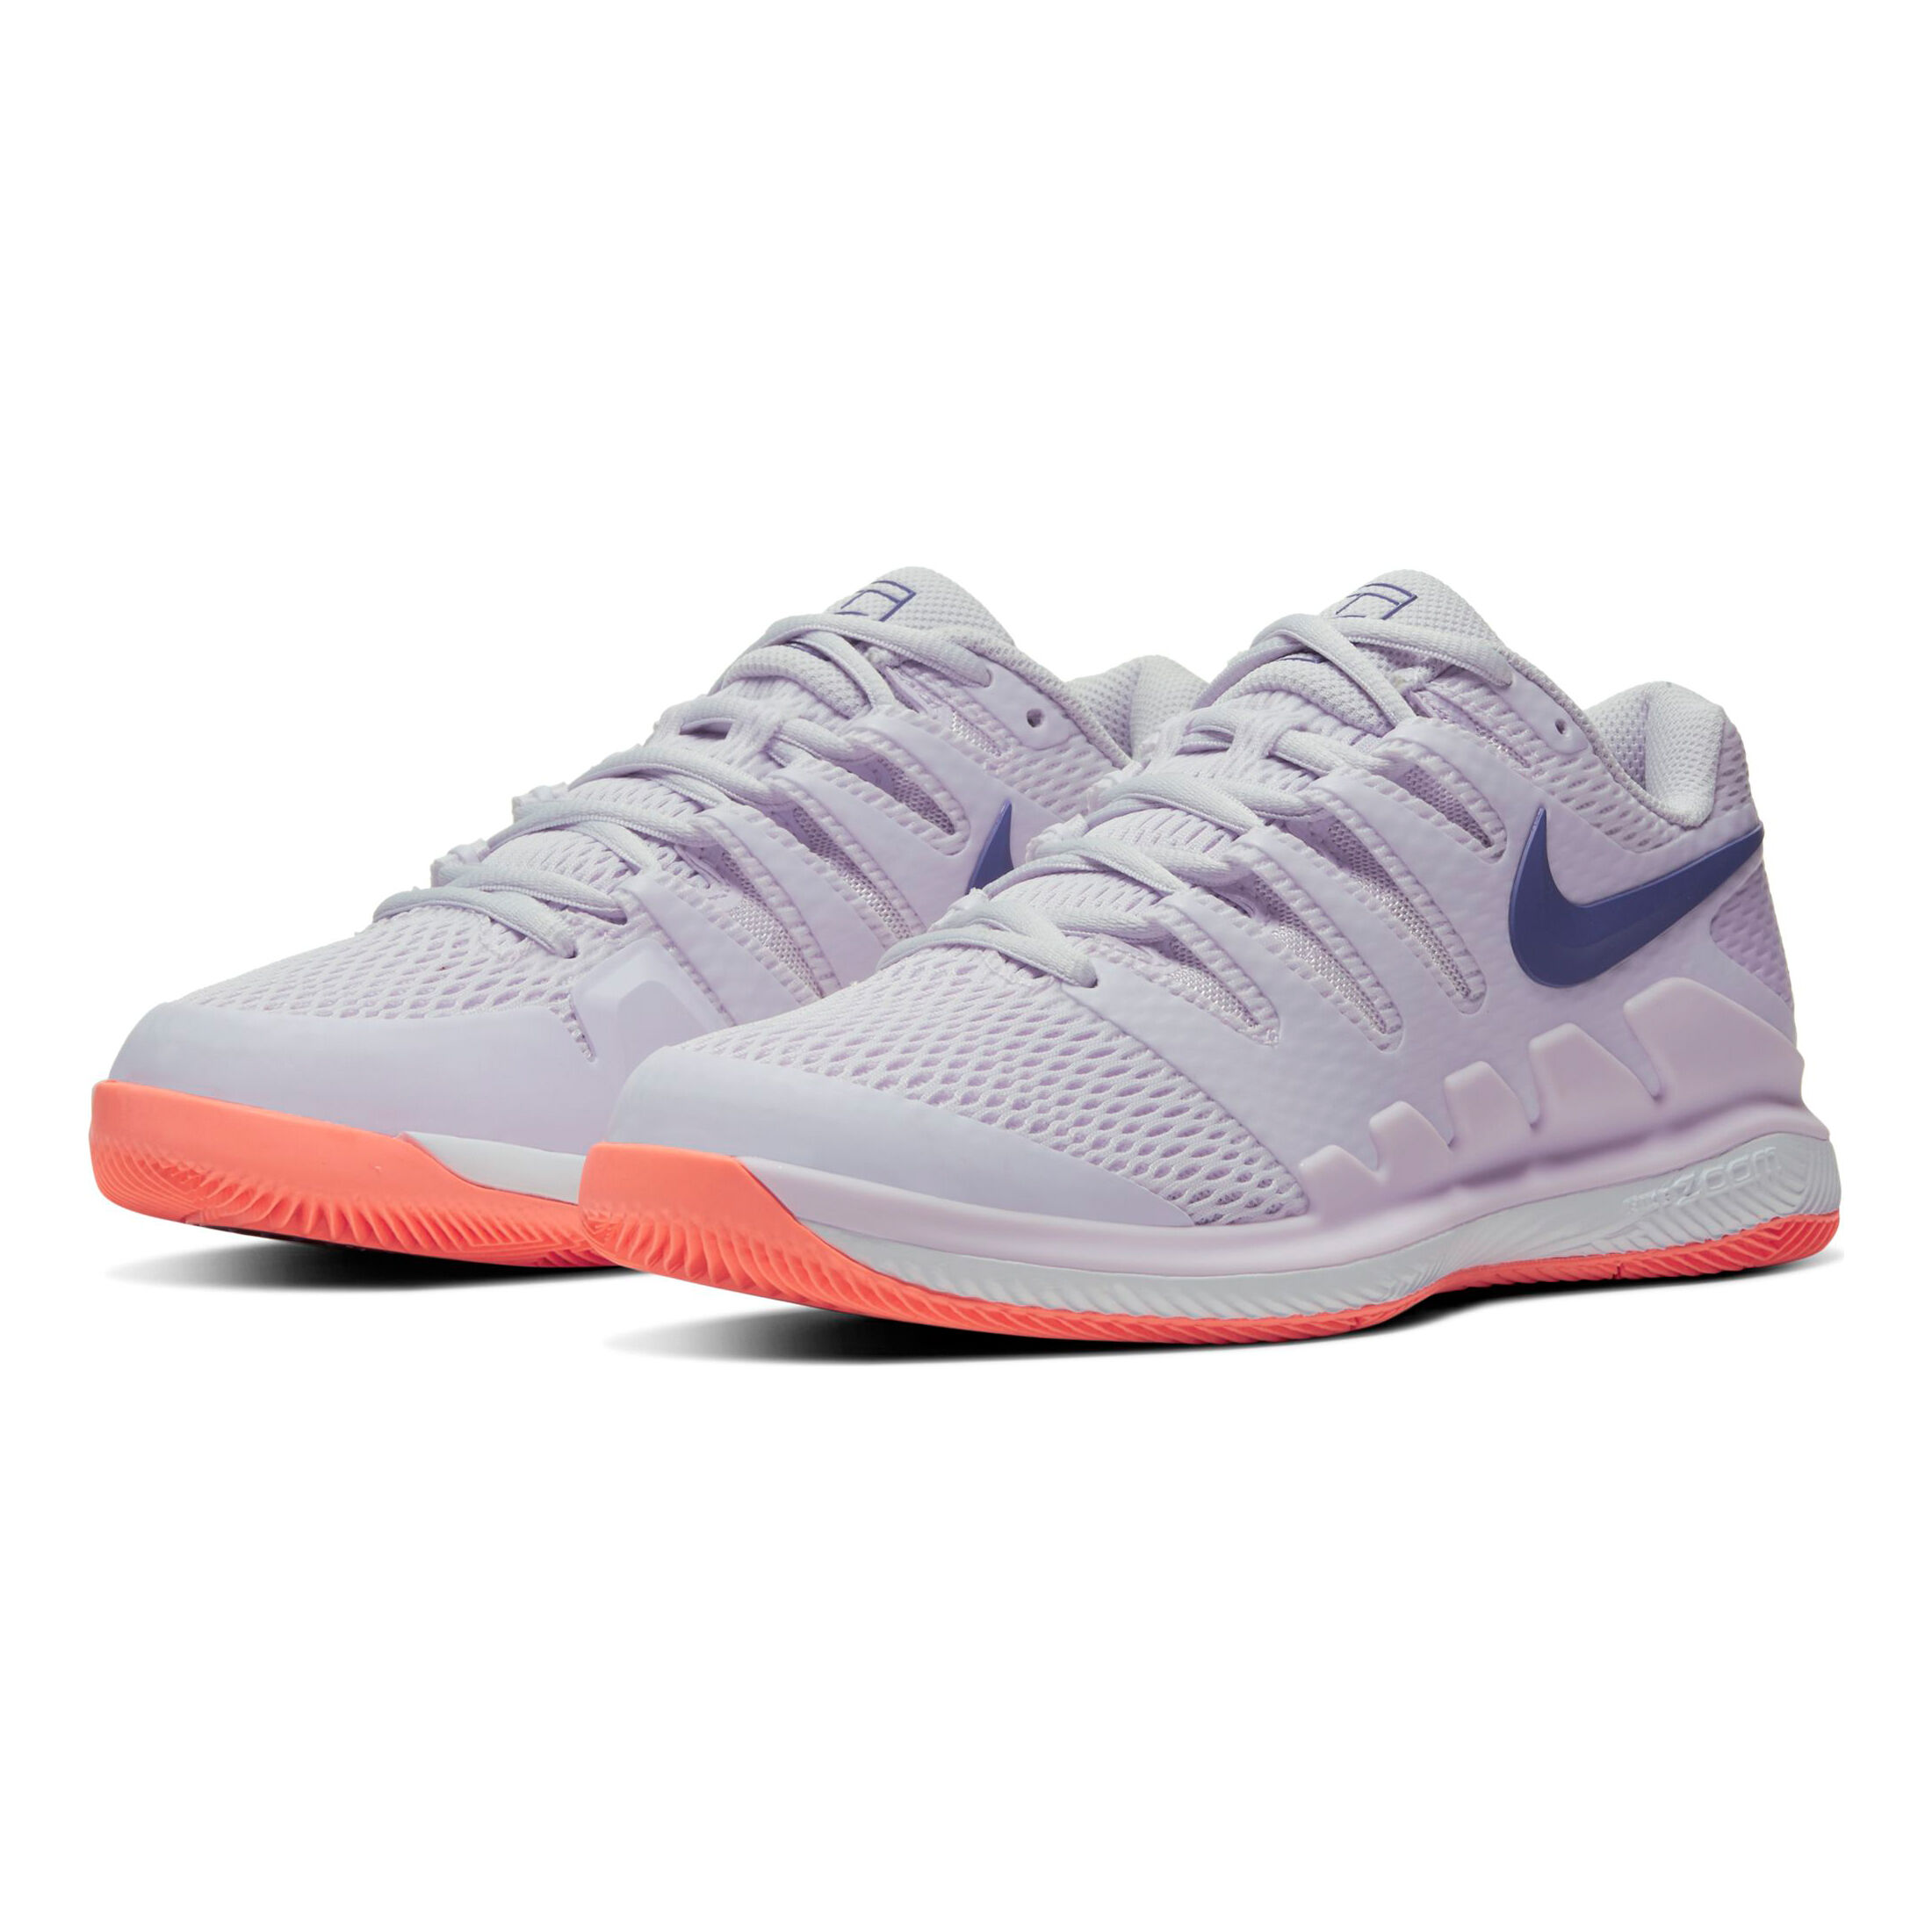 buy Nike Air Zoom Vapor X All Court Shoe Women - Lilac, Violet ...